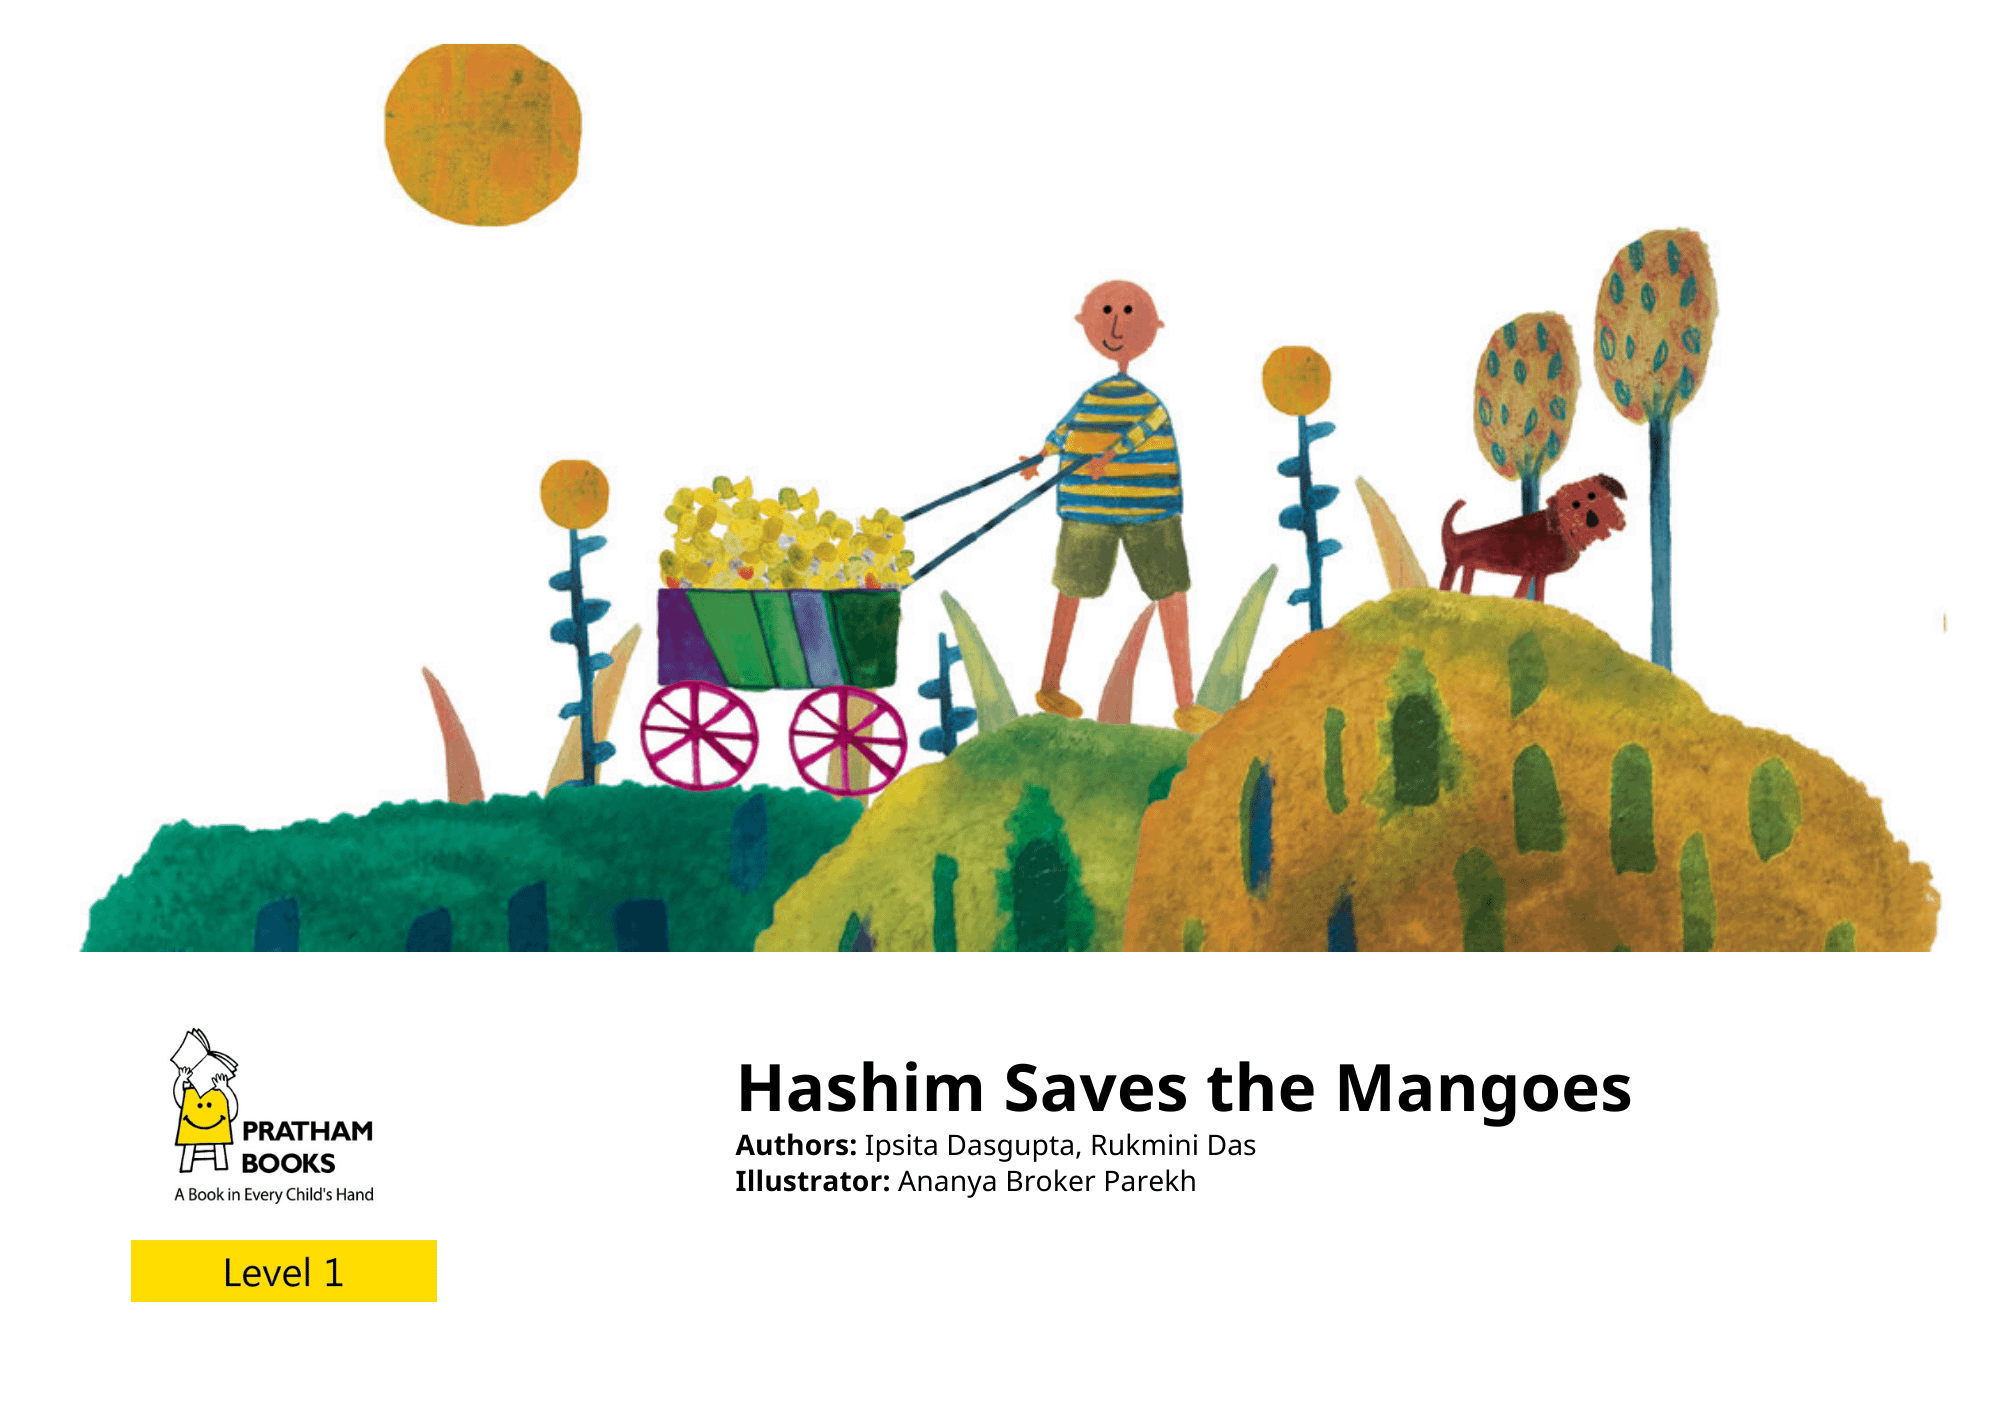 Hashim saves the Mangoes